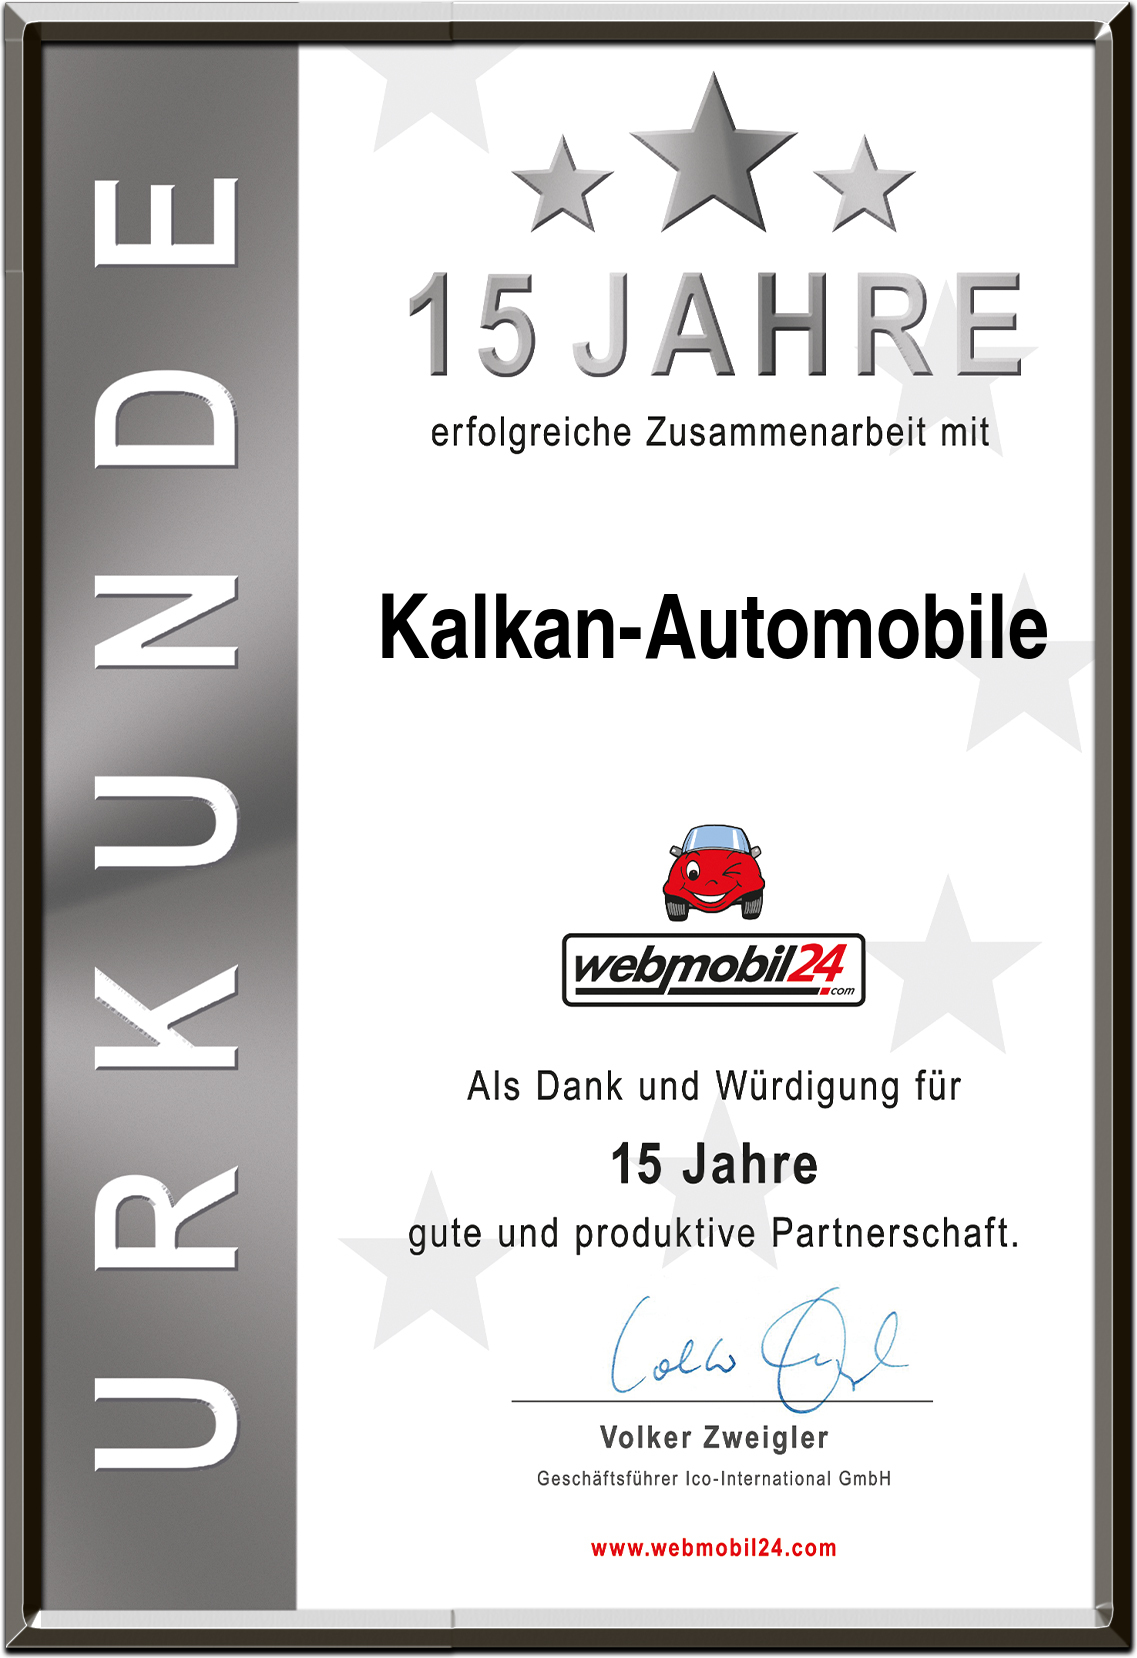 Kalkan-Automobile